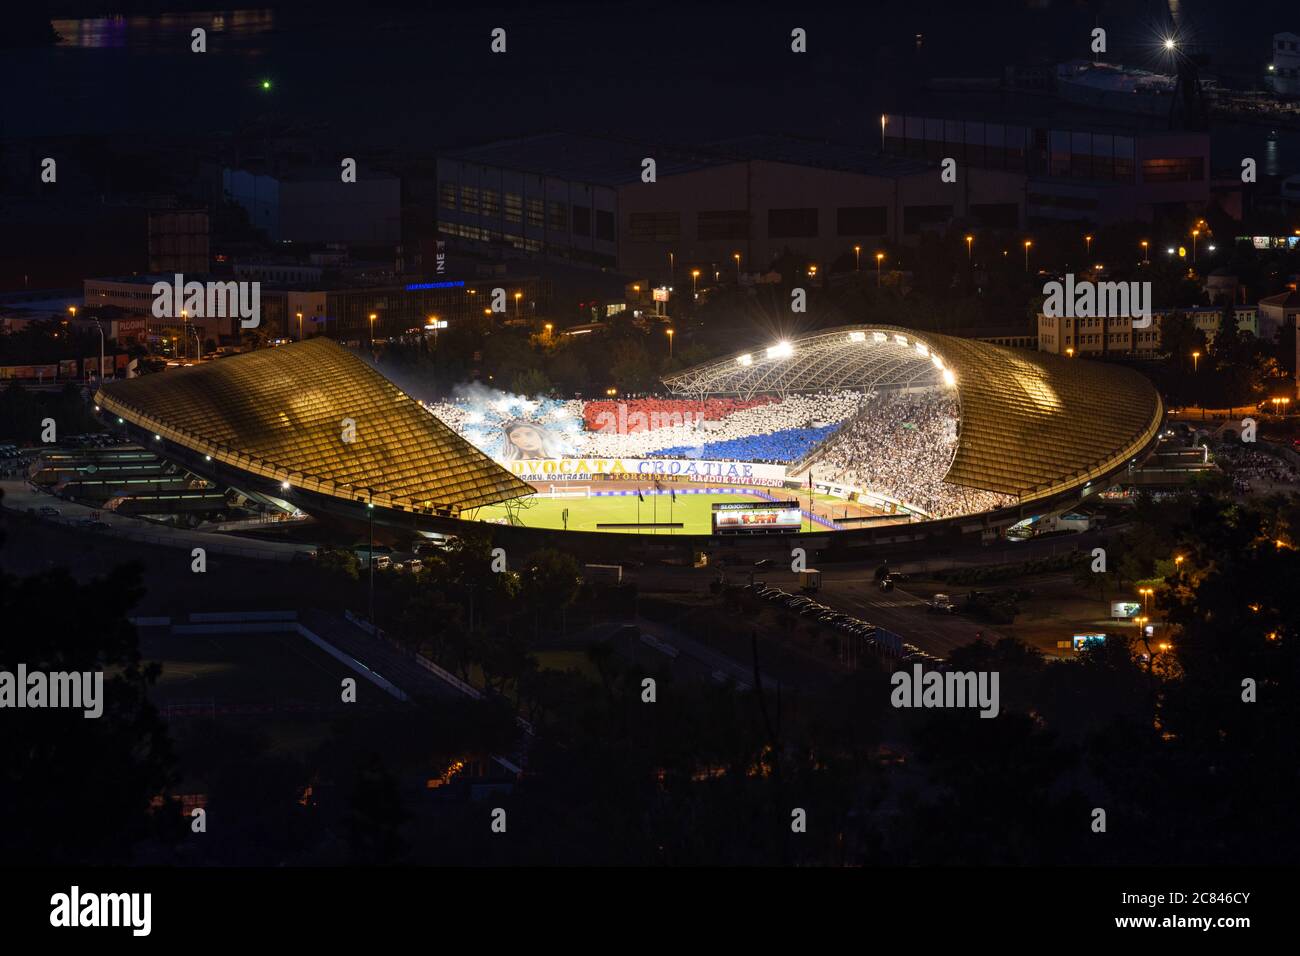 File:Smoke in the stadium of Hajduk Split.jpg - Wikimedia Commons